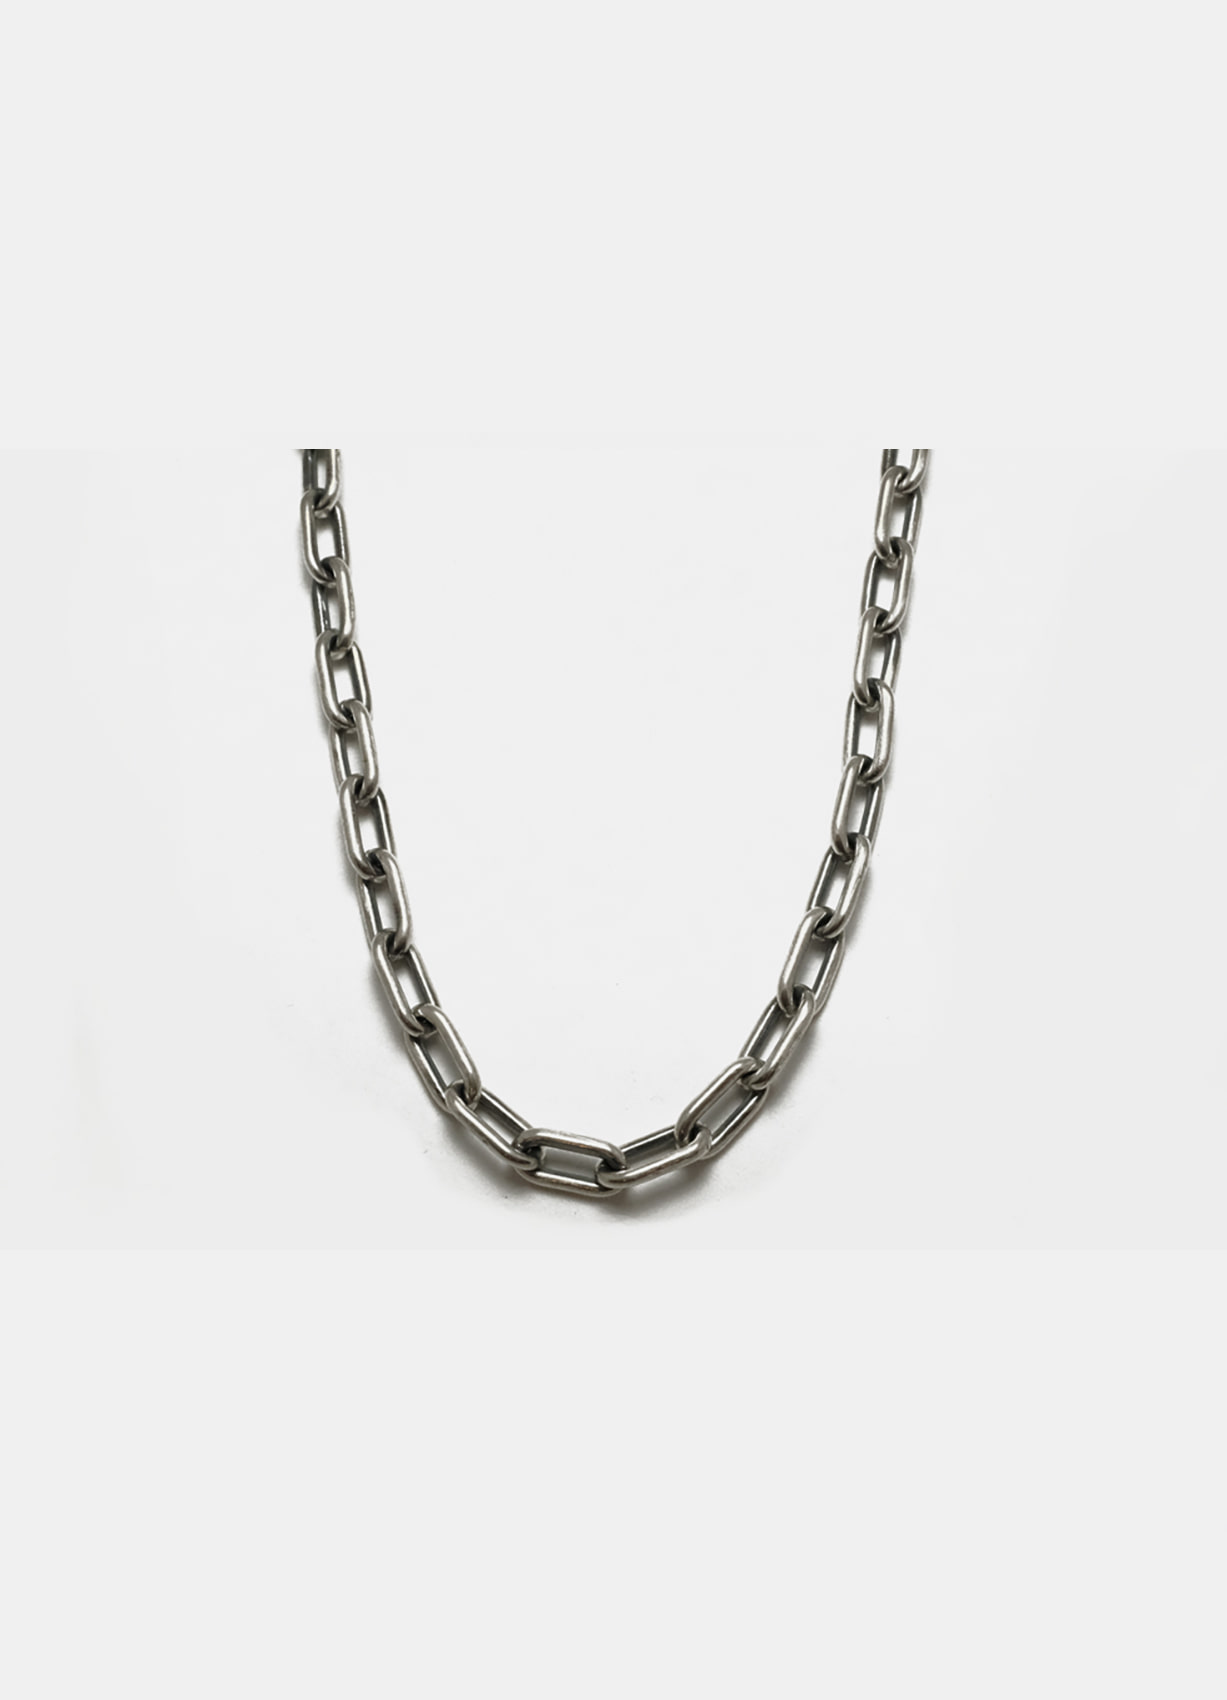 [fluid] long link chain necklace